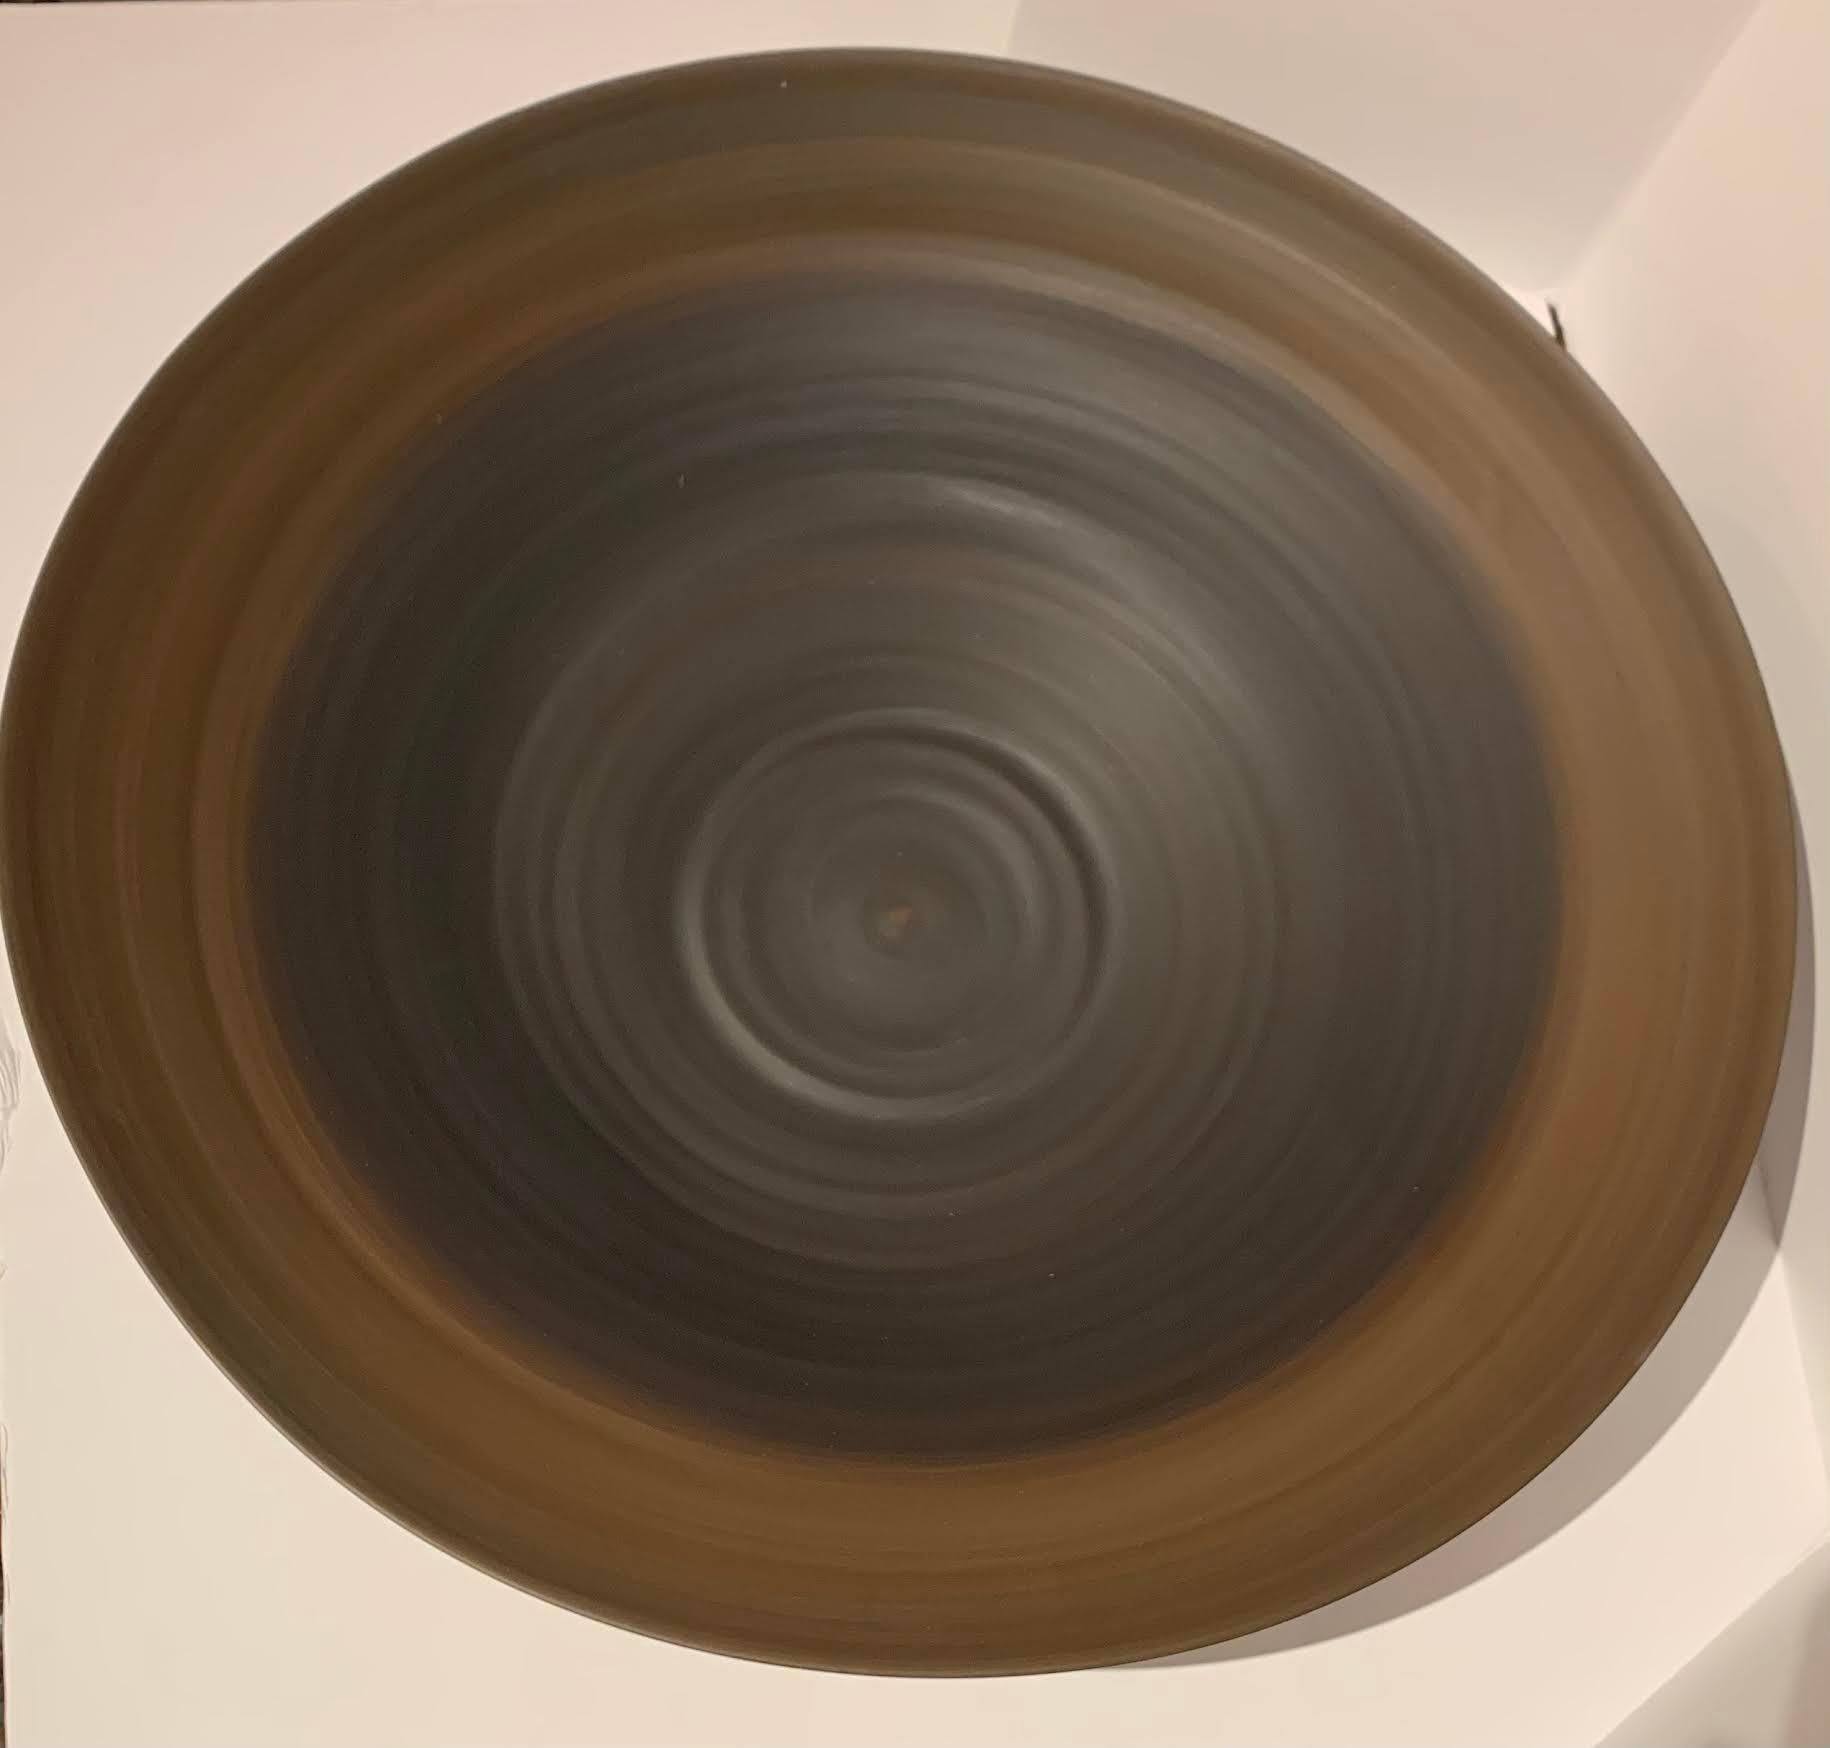 extra large ceramic bowls